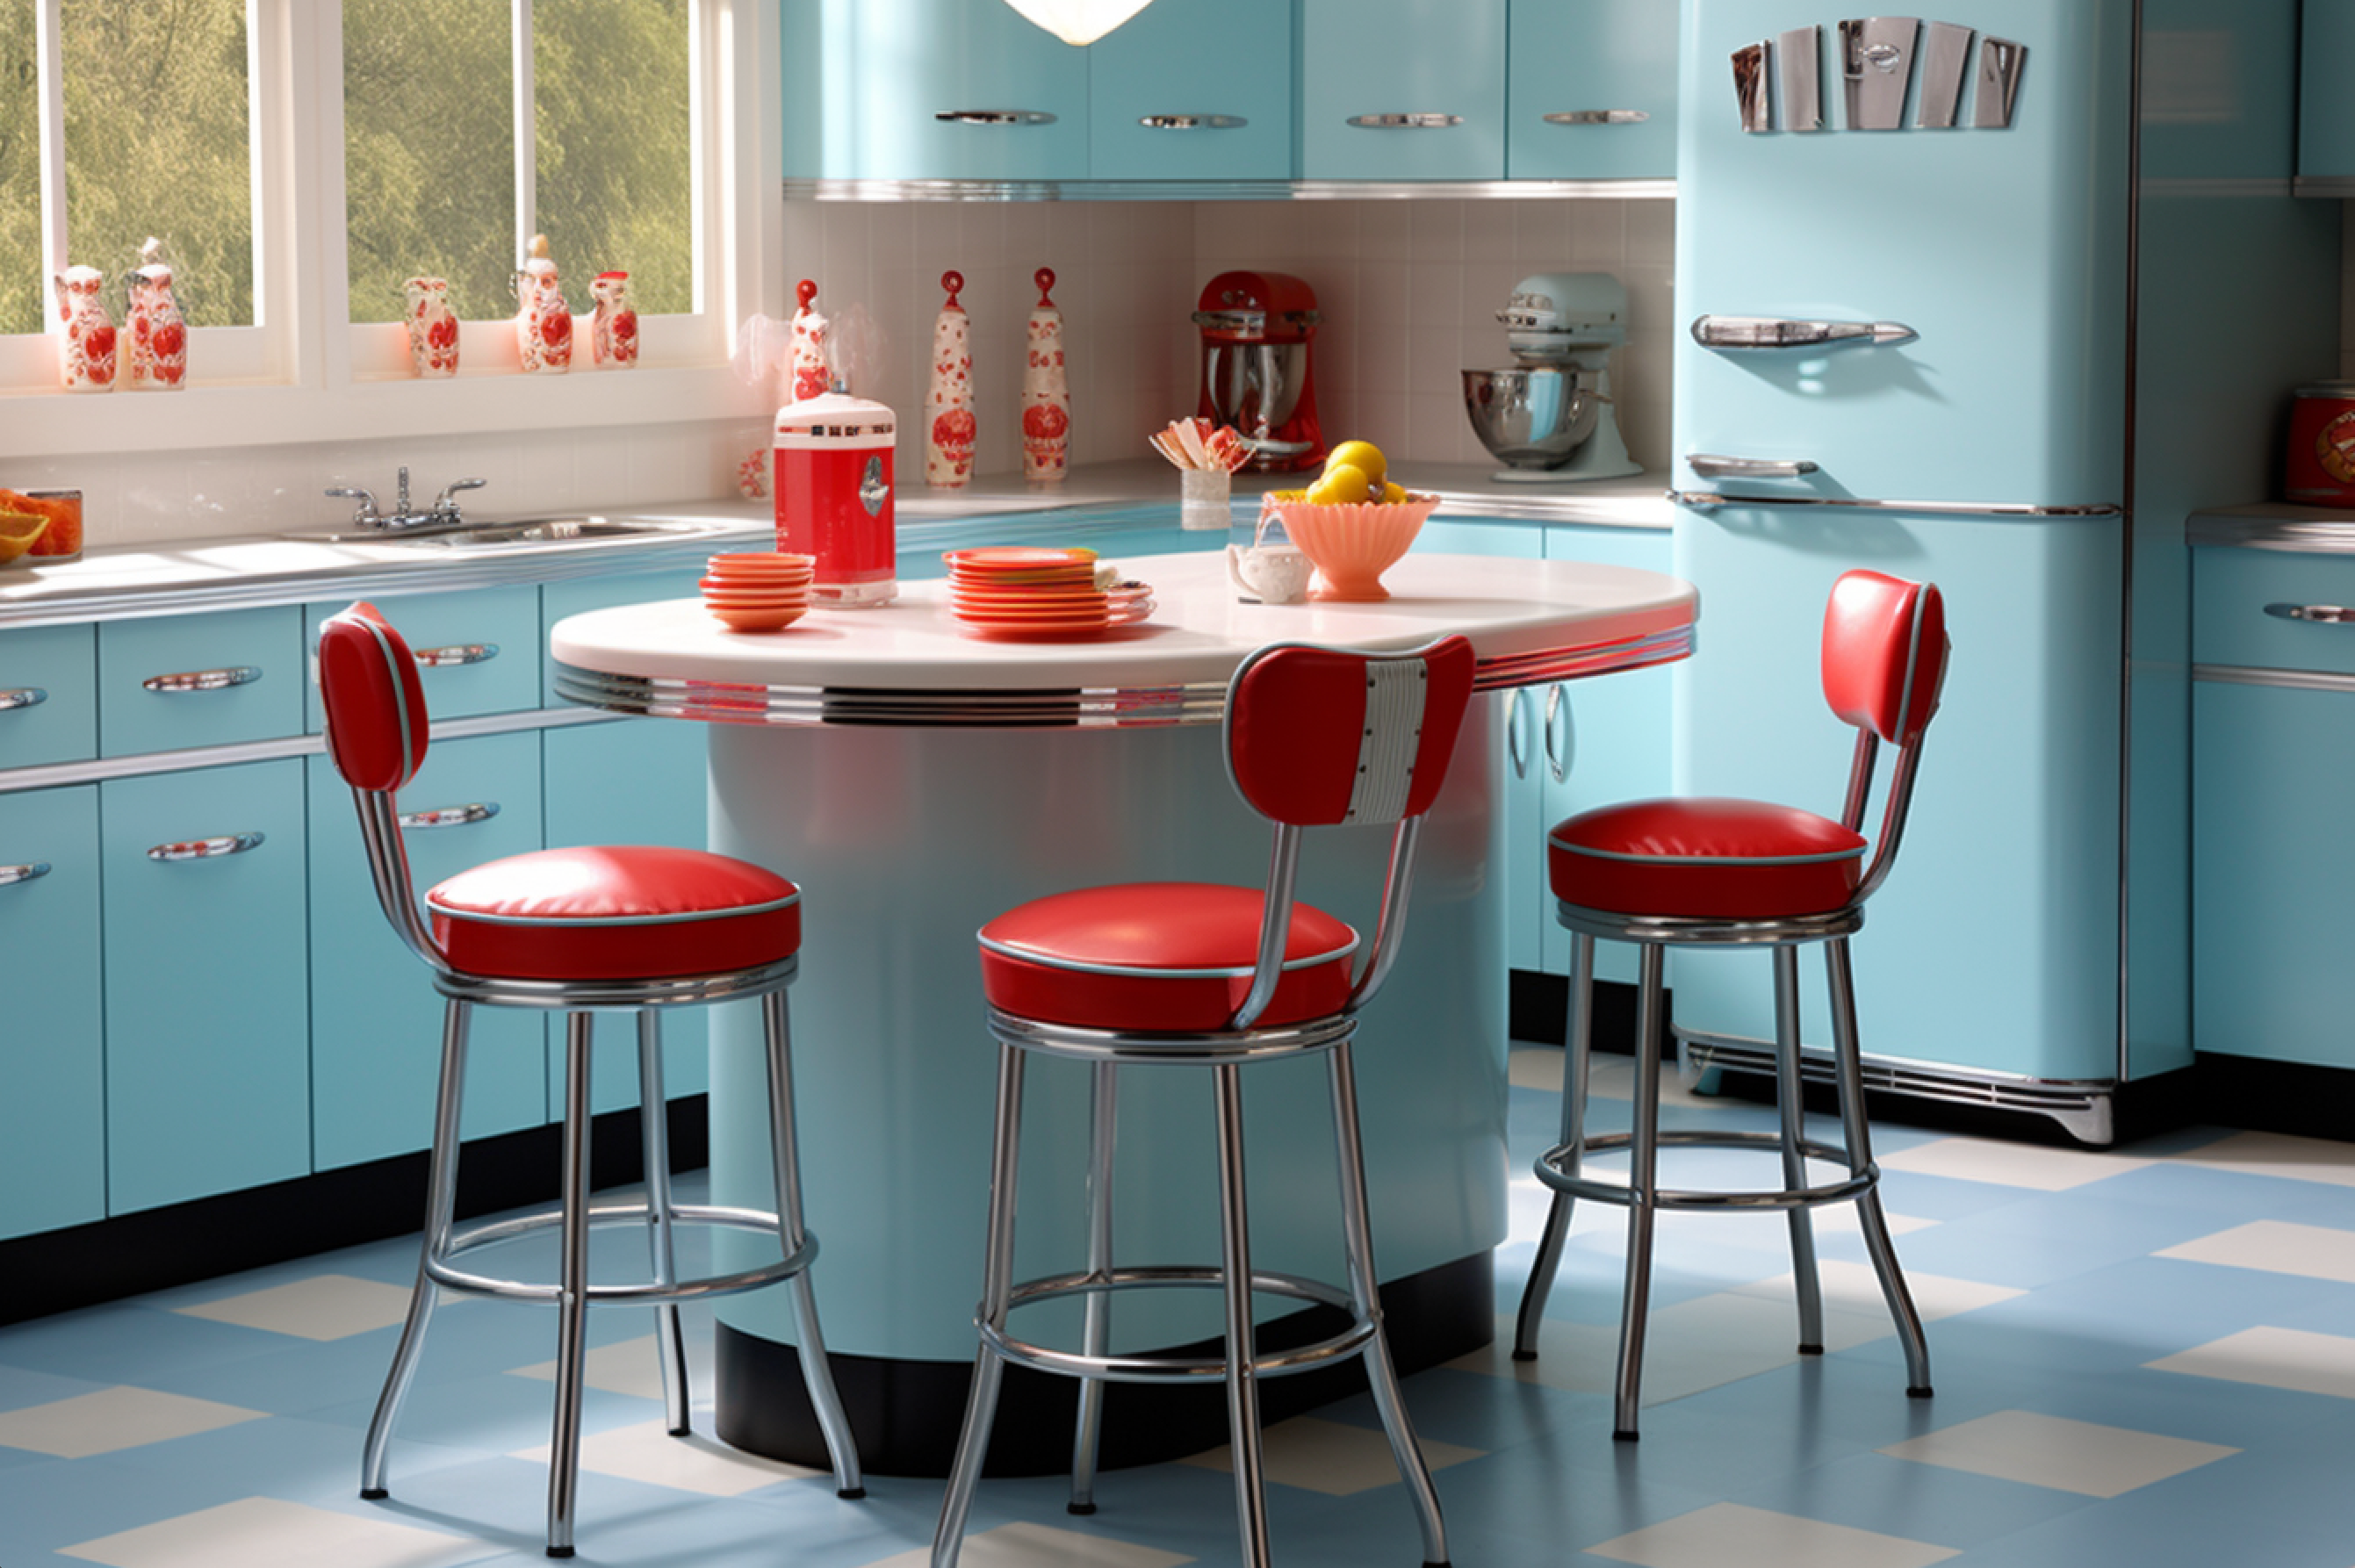 20. Light Blue and Red Color Scheme - Retro Kitchen